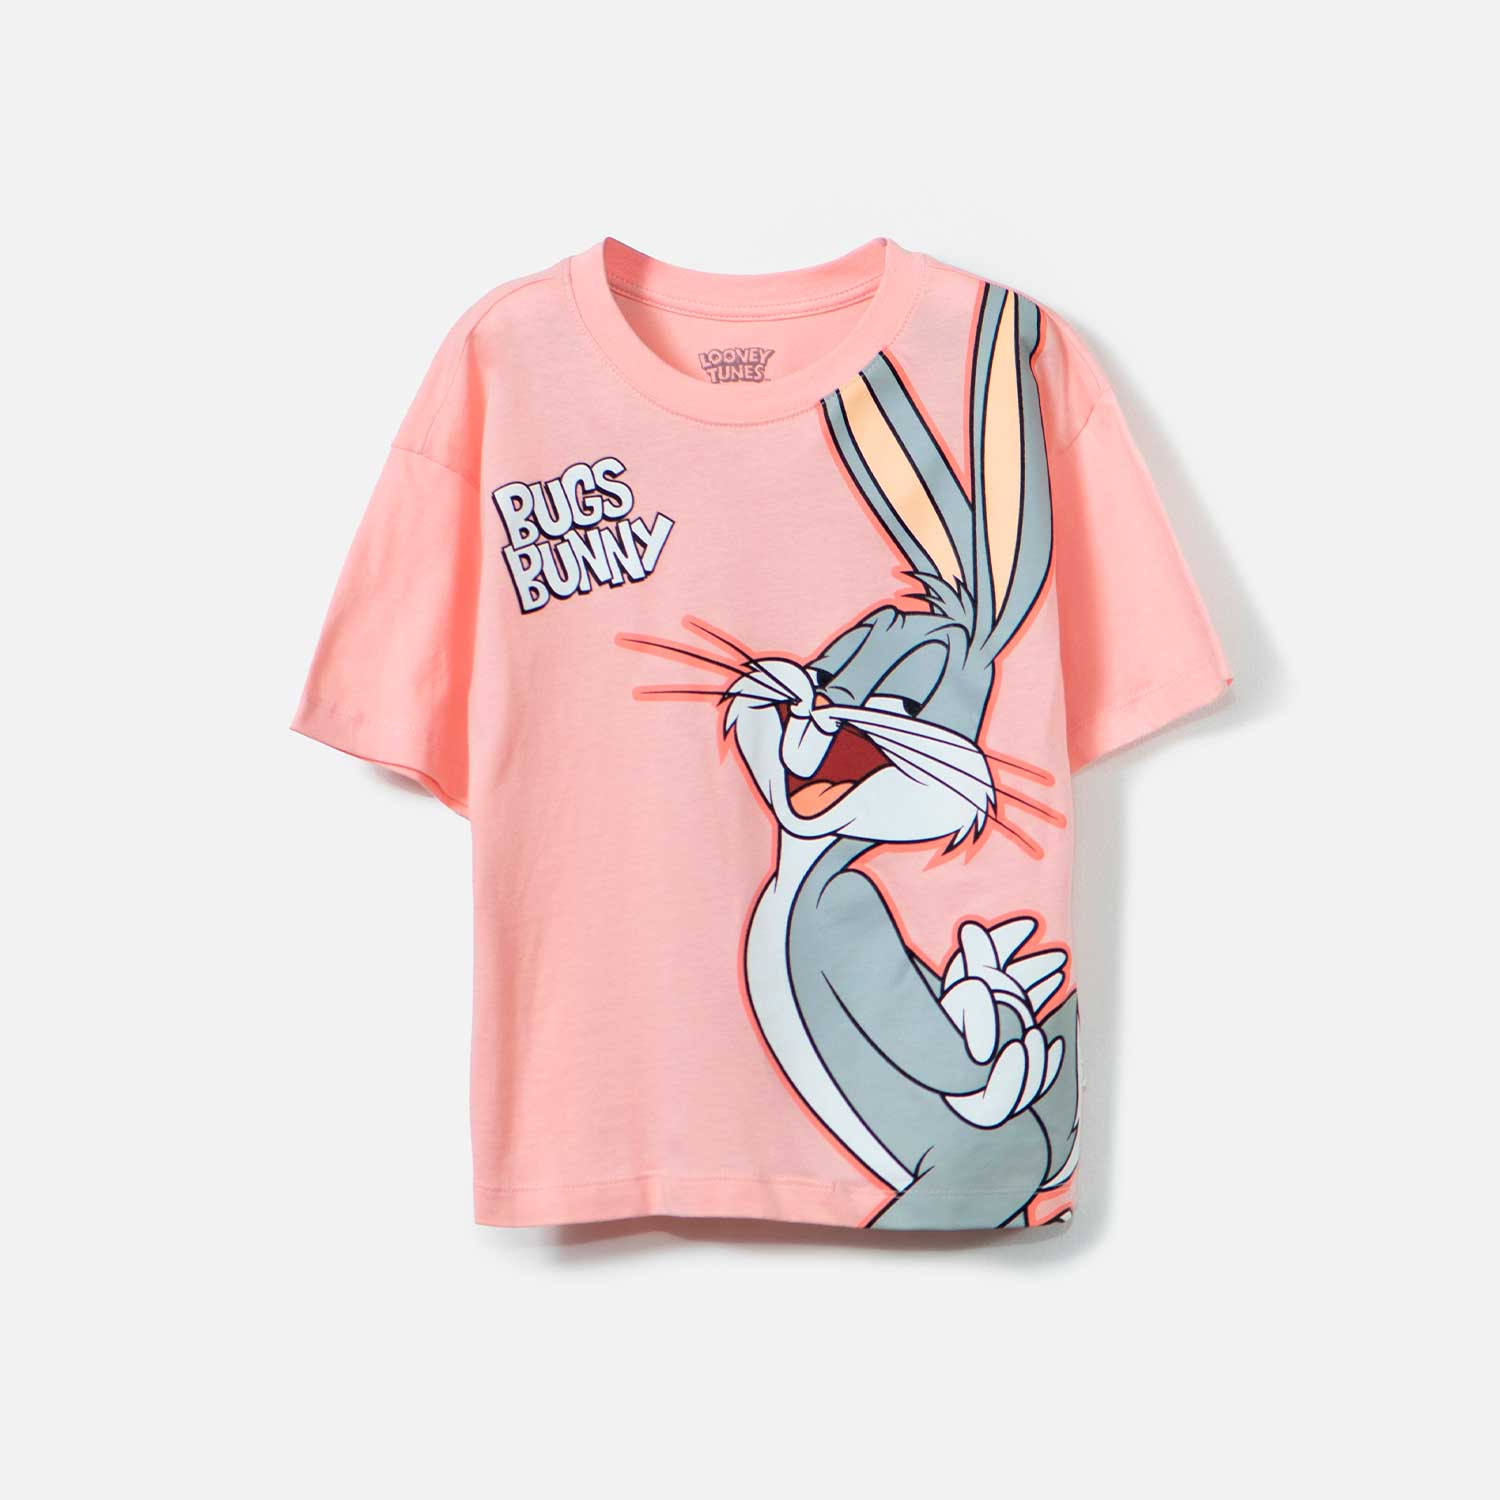 Camiseta de Bugs Bunny corta mandarina para